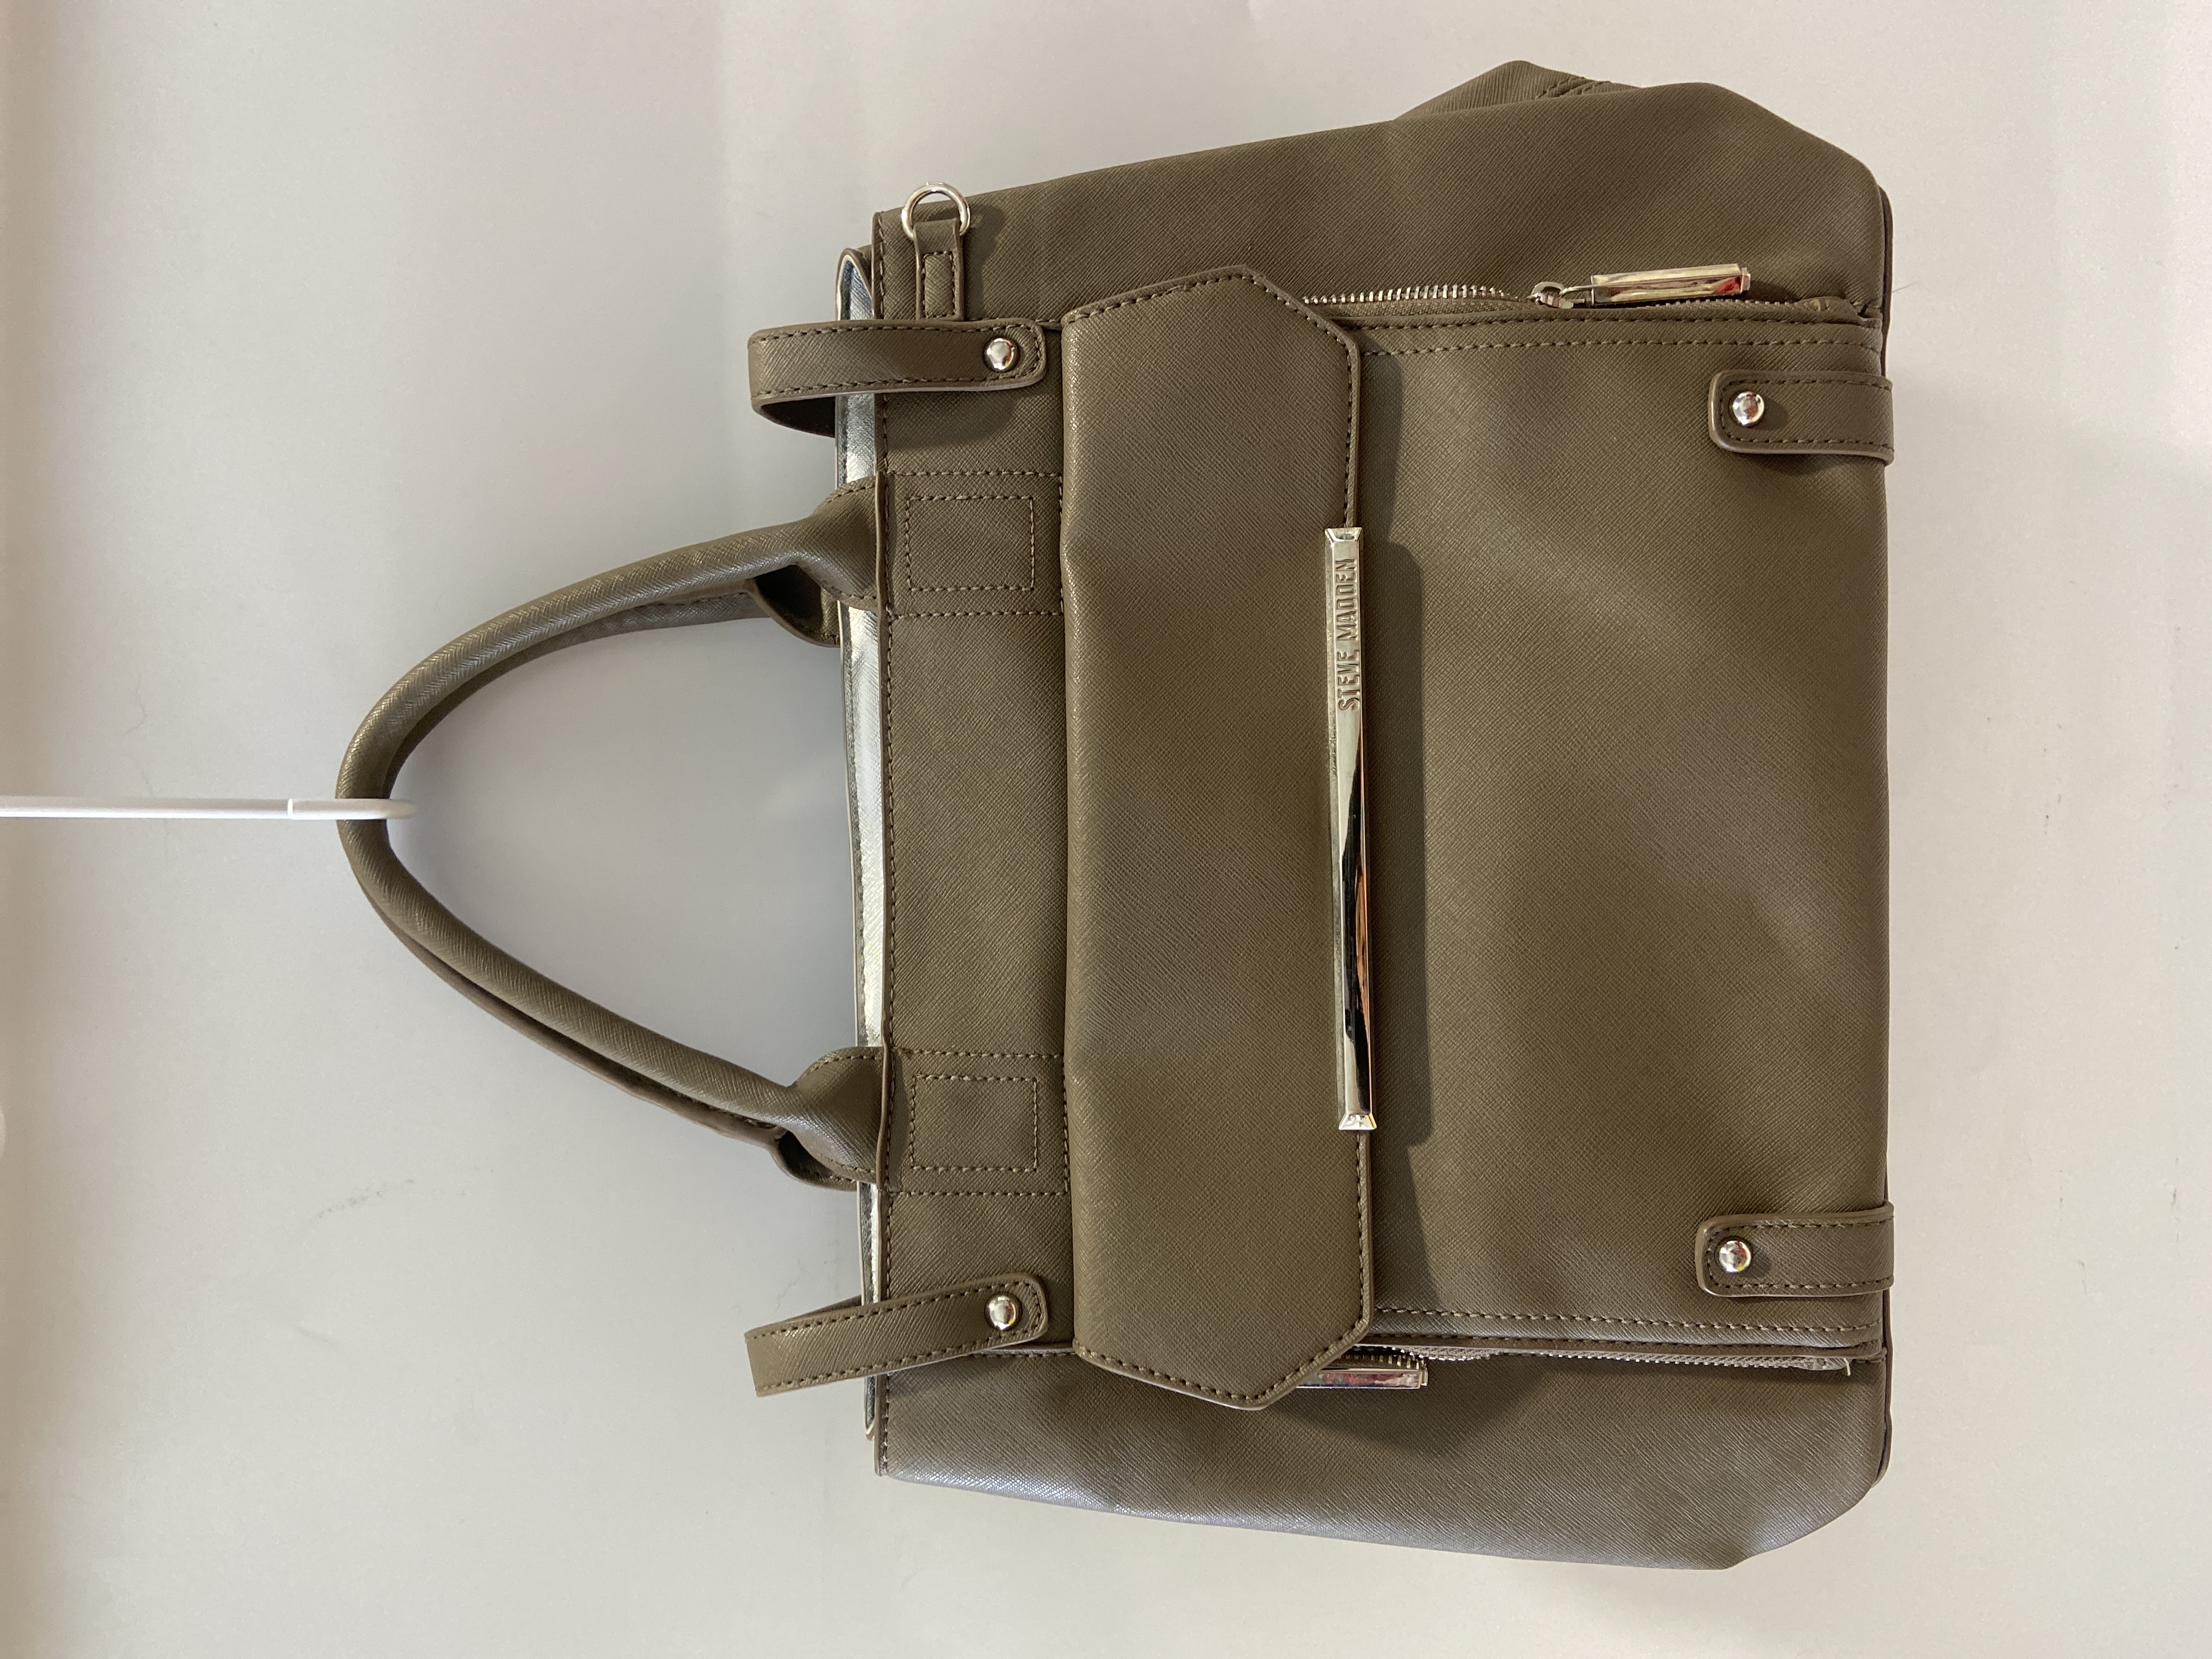 Steve Madden Authenticated Leather Handbag